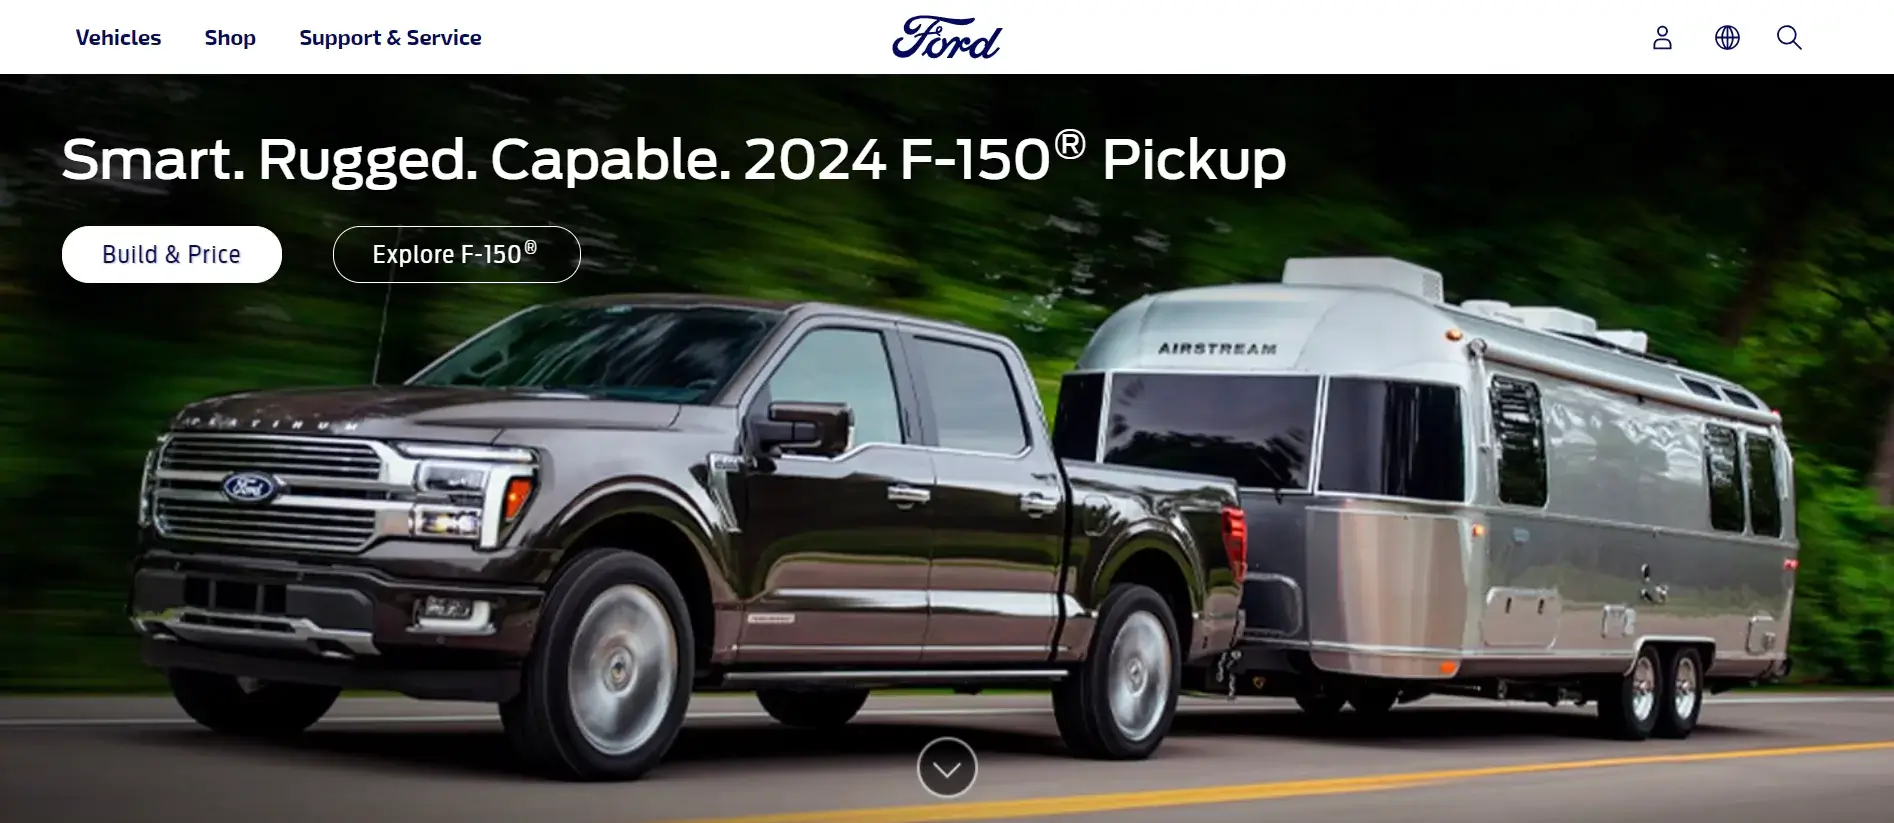 Digital transformation failure examples - Ford